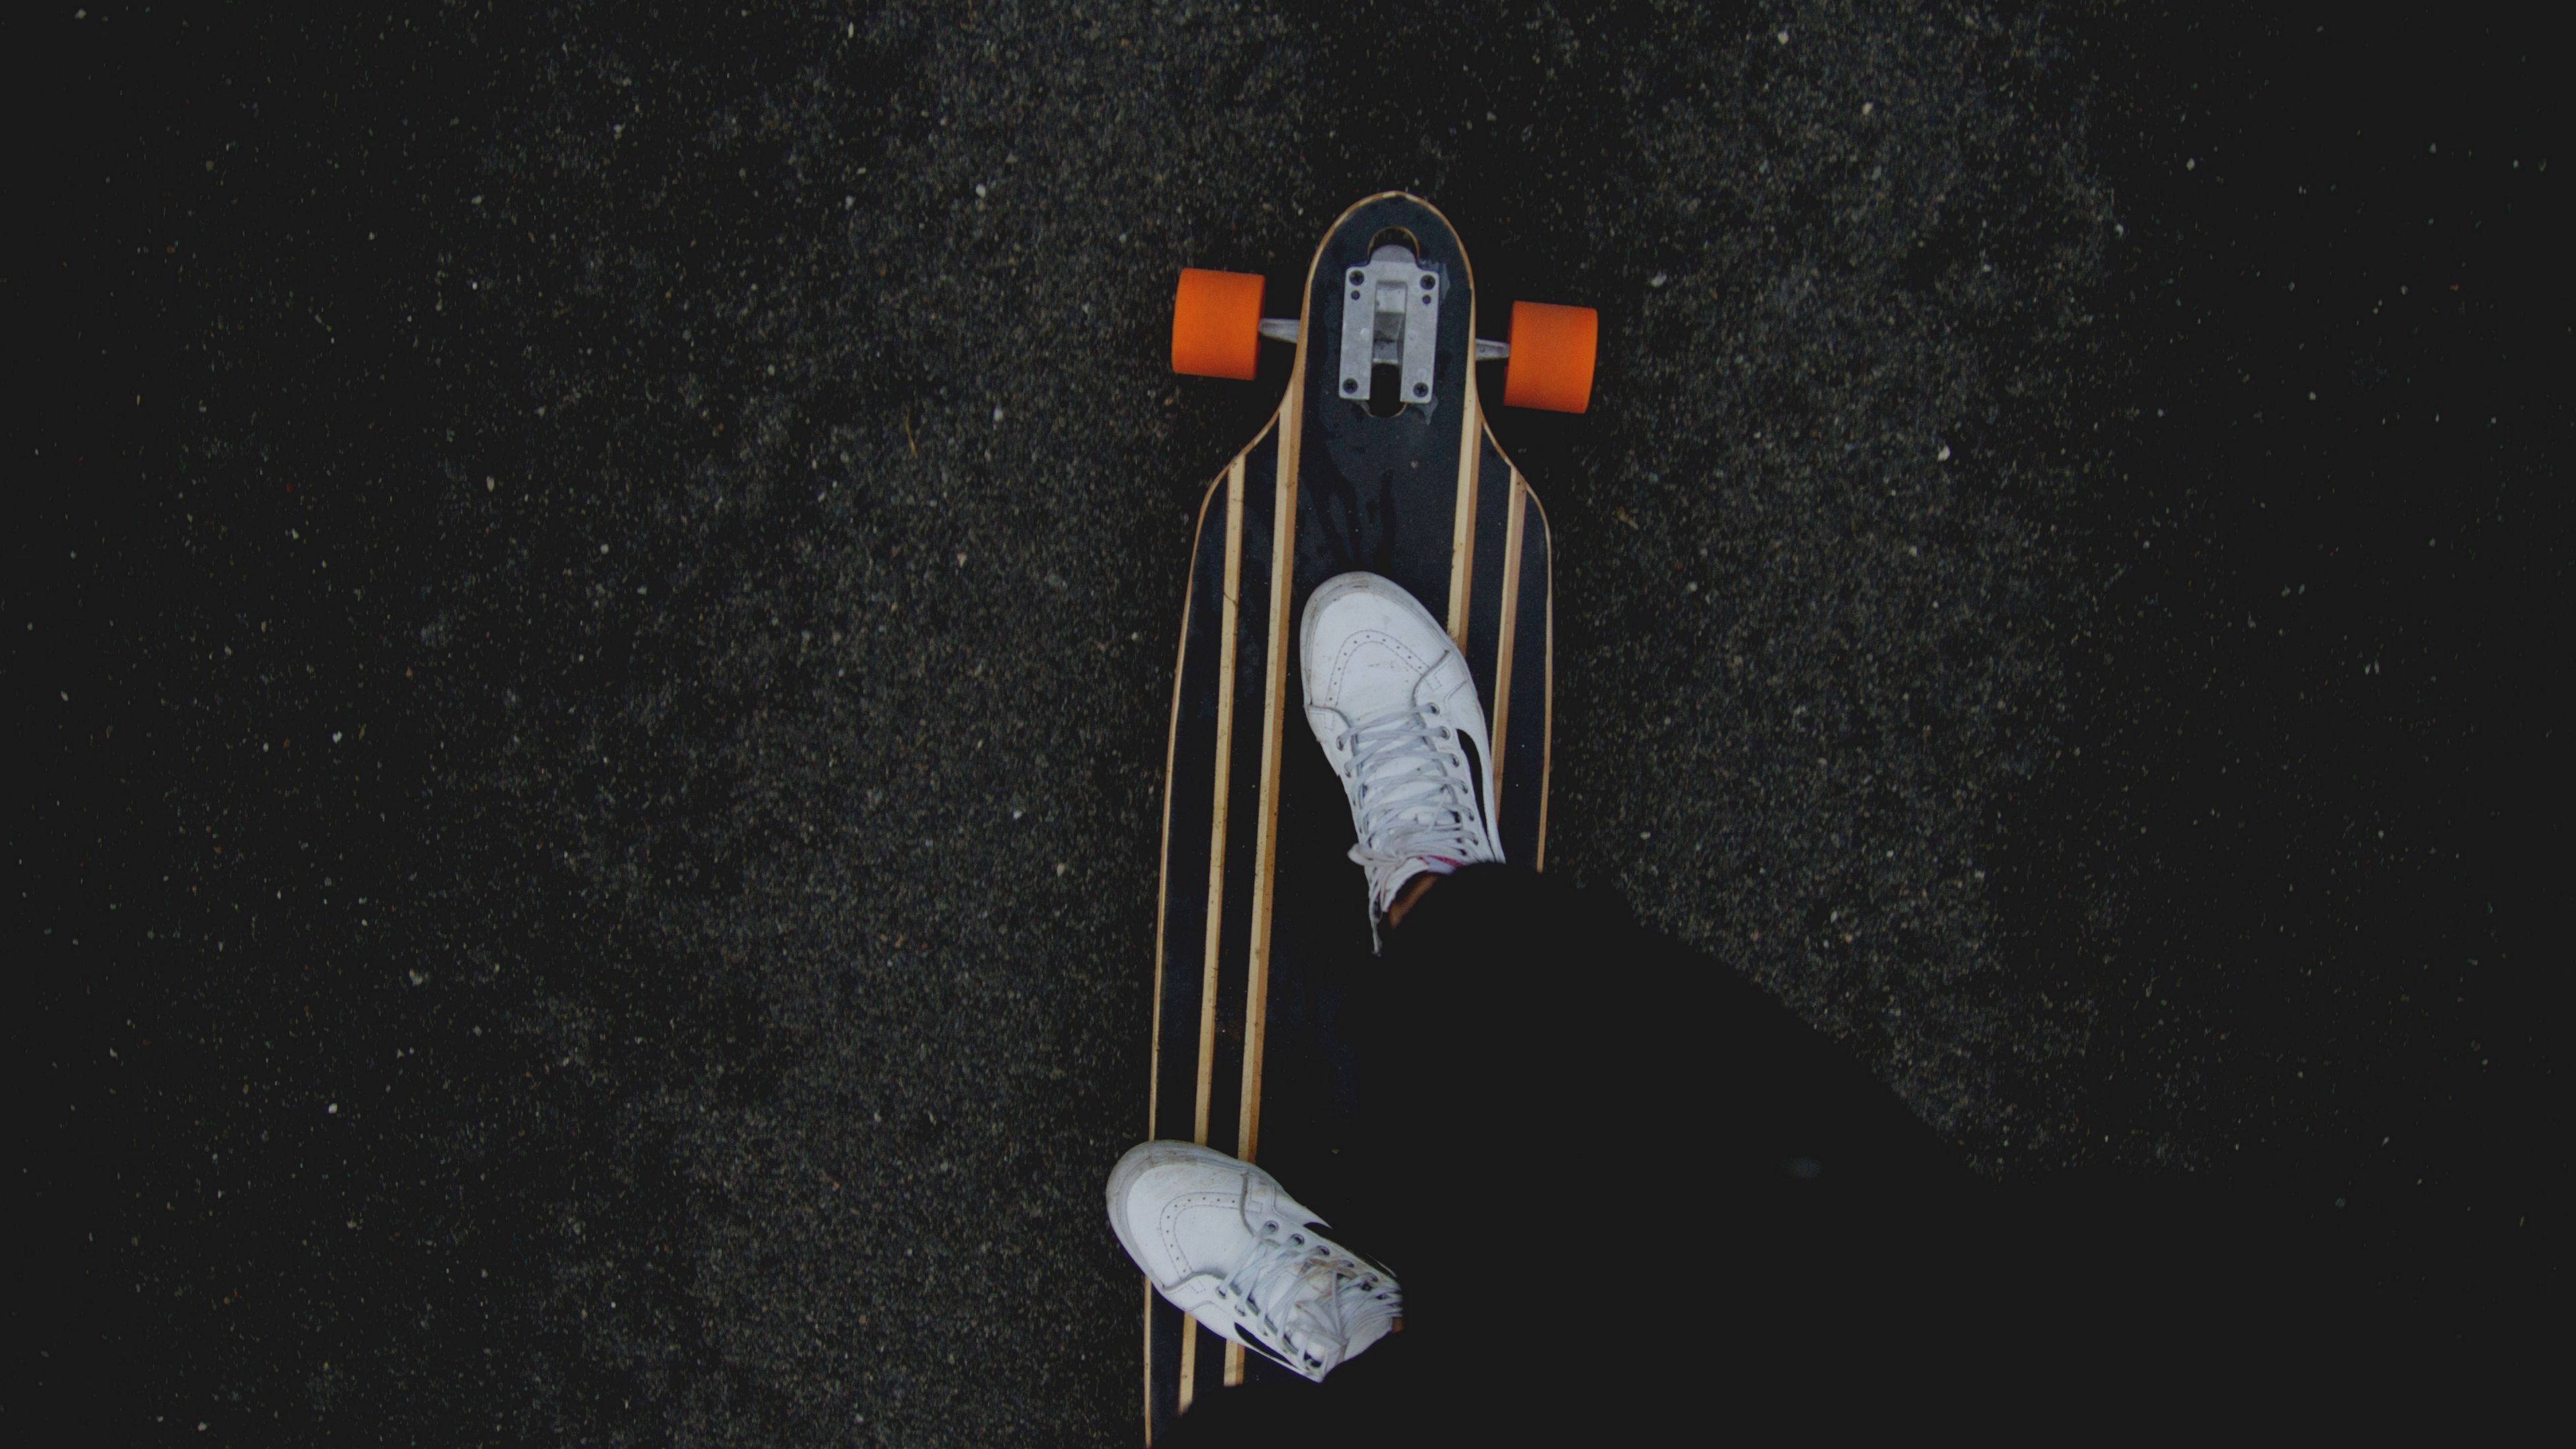 Skateboard - image fond d'écran.jpg